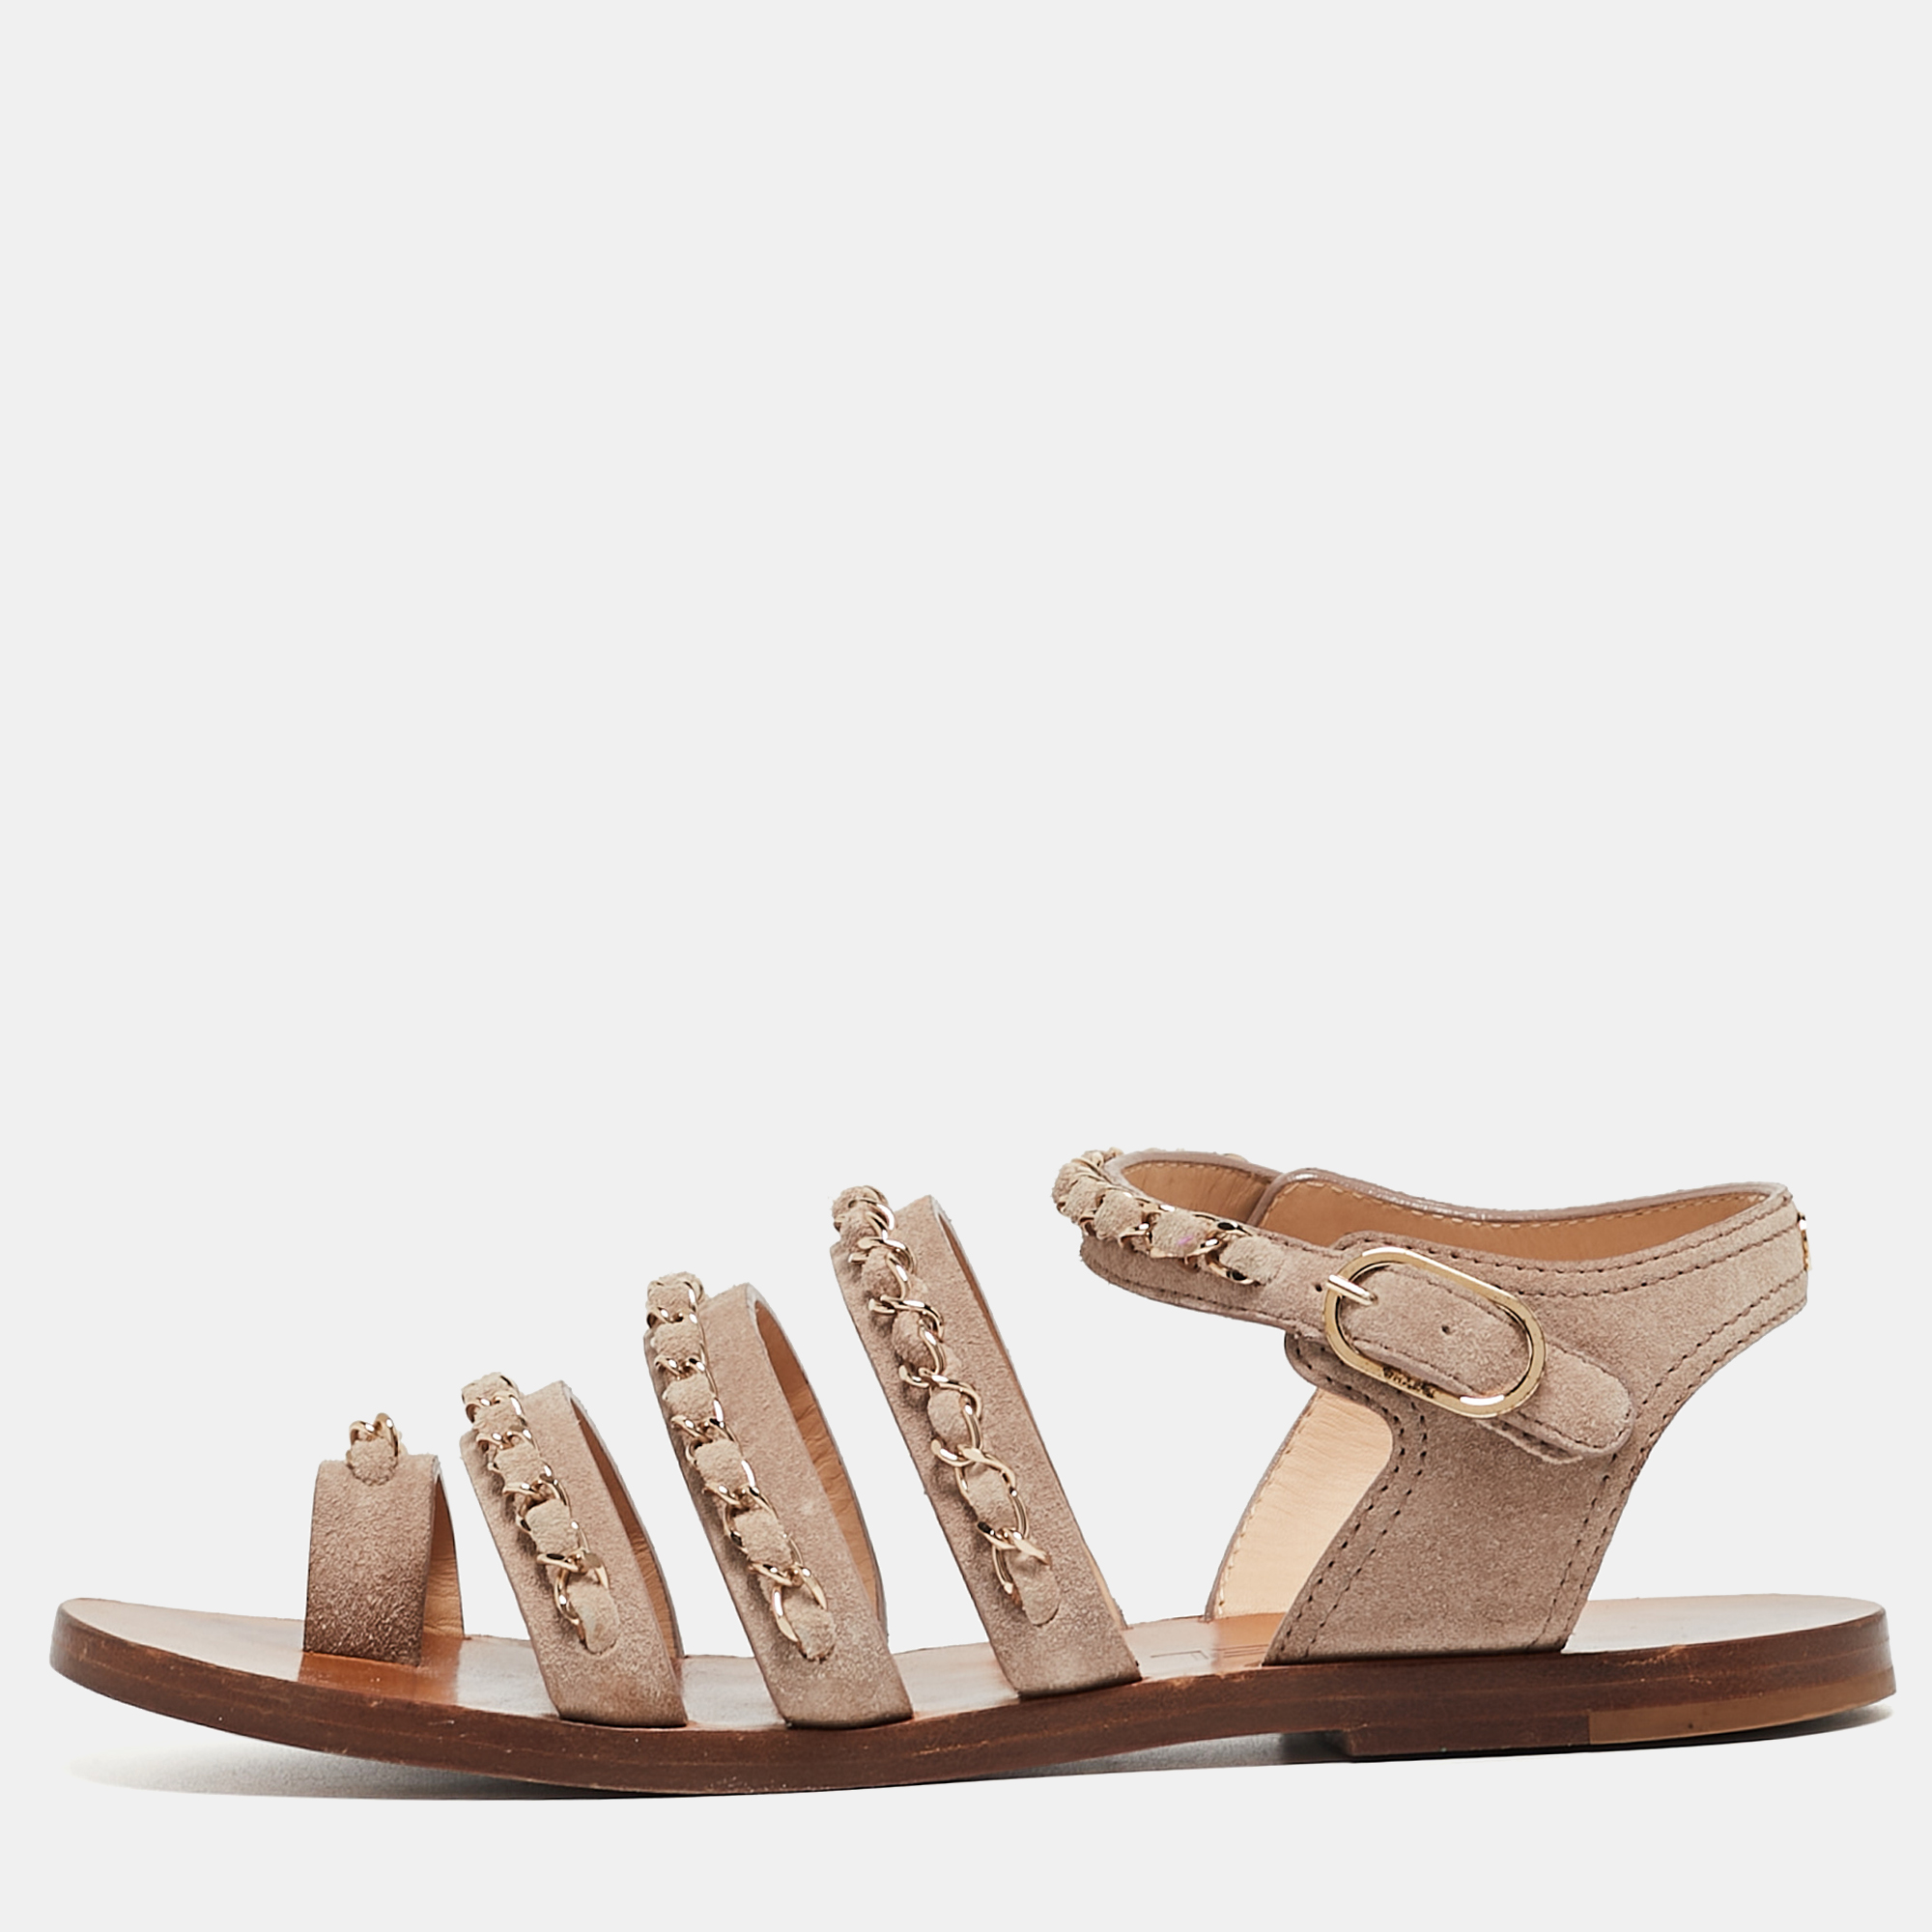 Chanel Beige Suede Chain Detail Flat Sandals Size 37